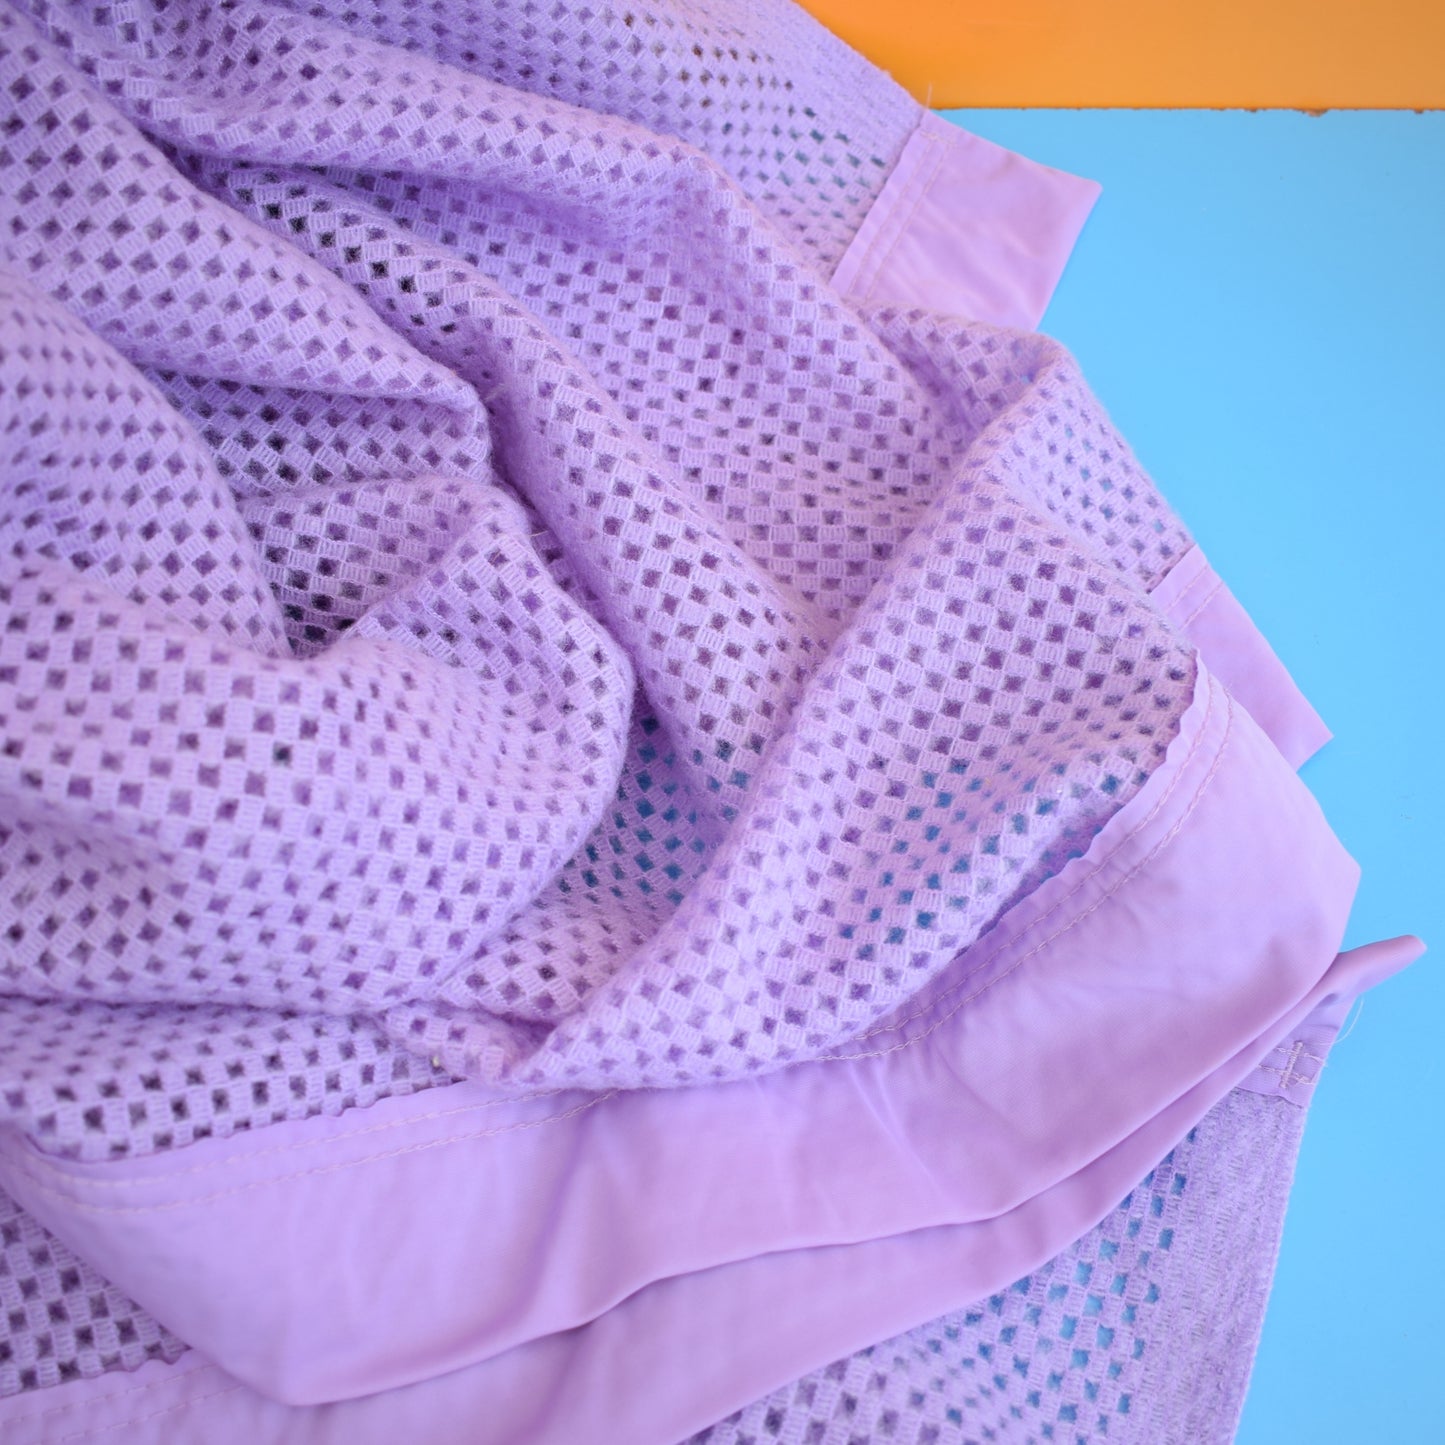 Vintage 1960s Cellular Blanket / Throw - Vibrant Lilac